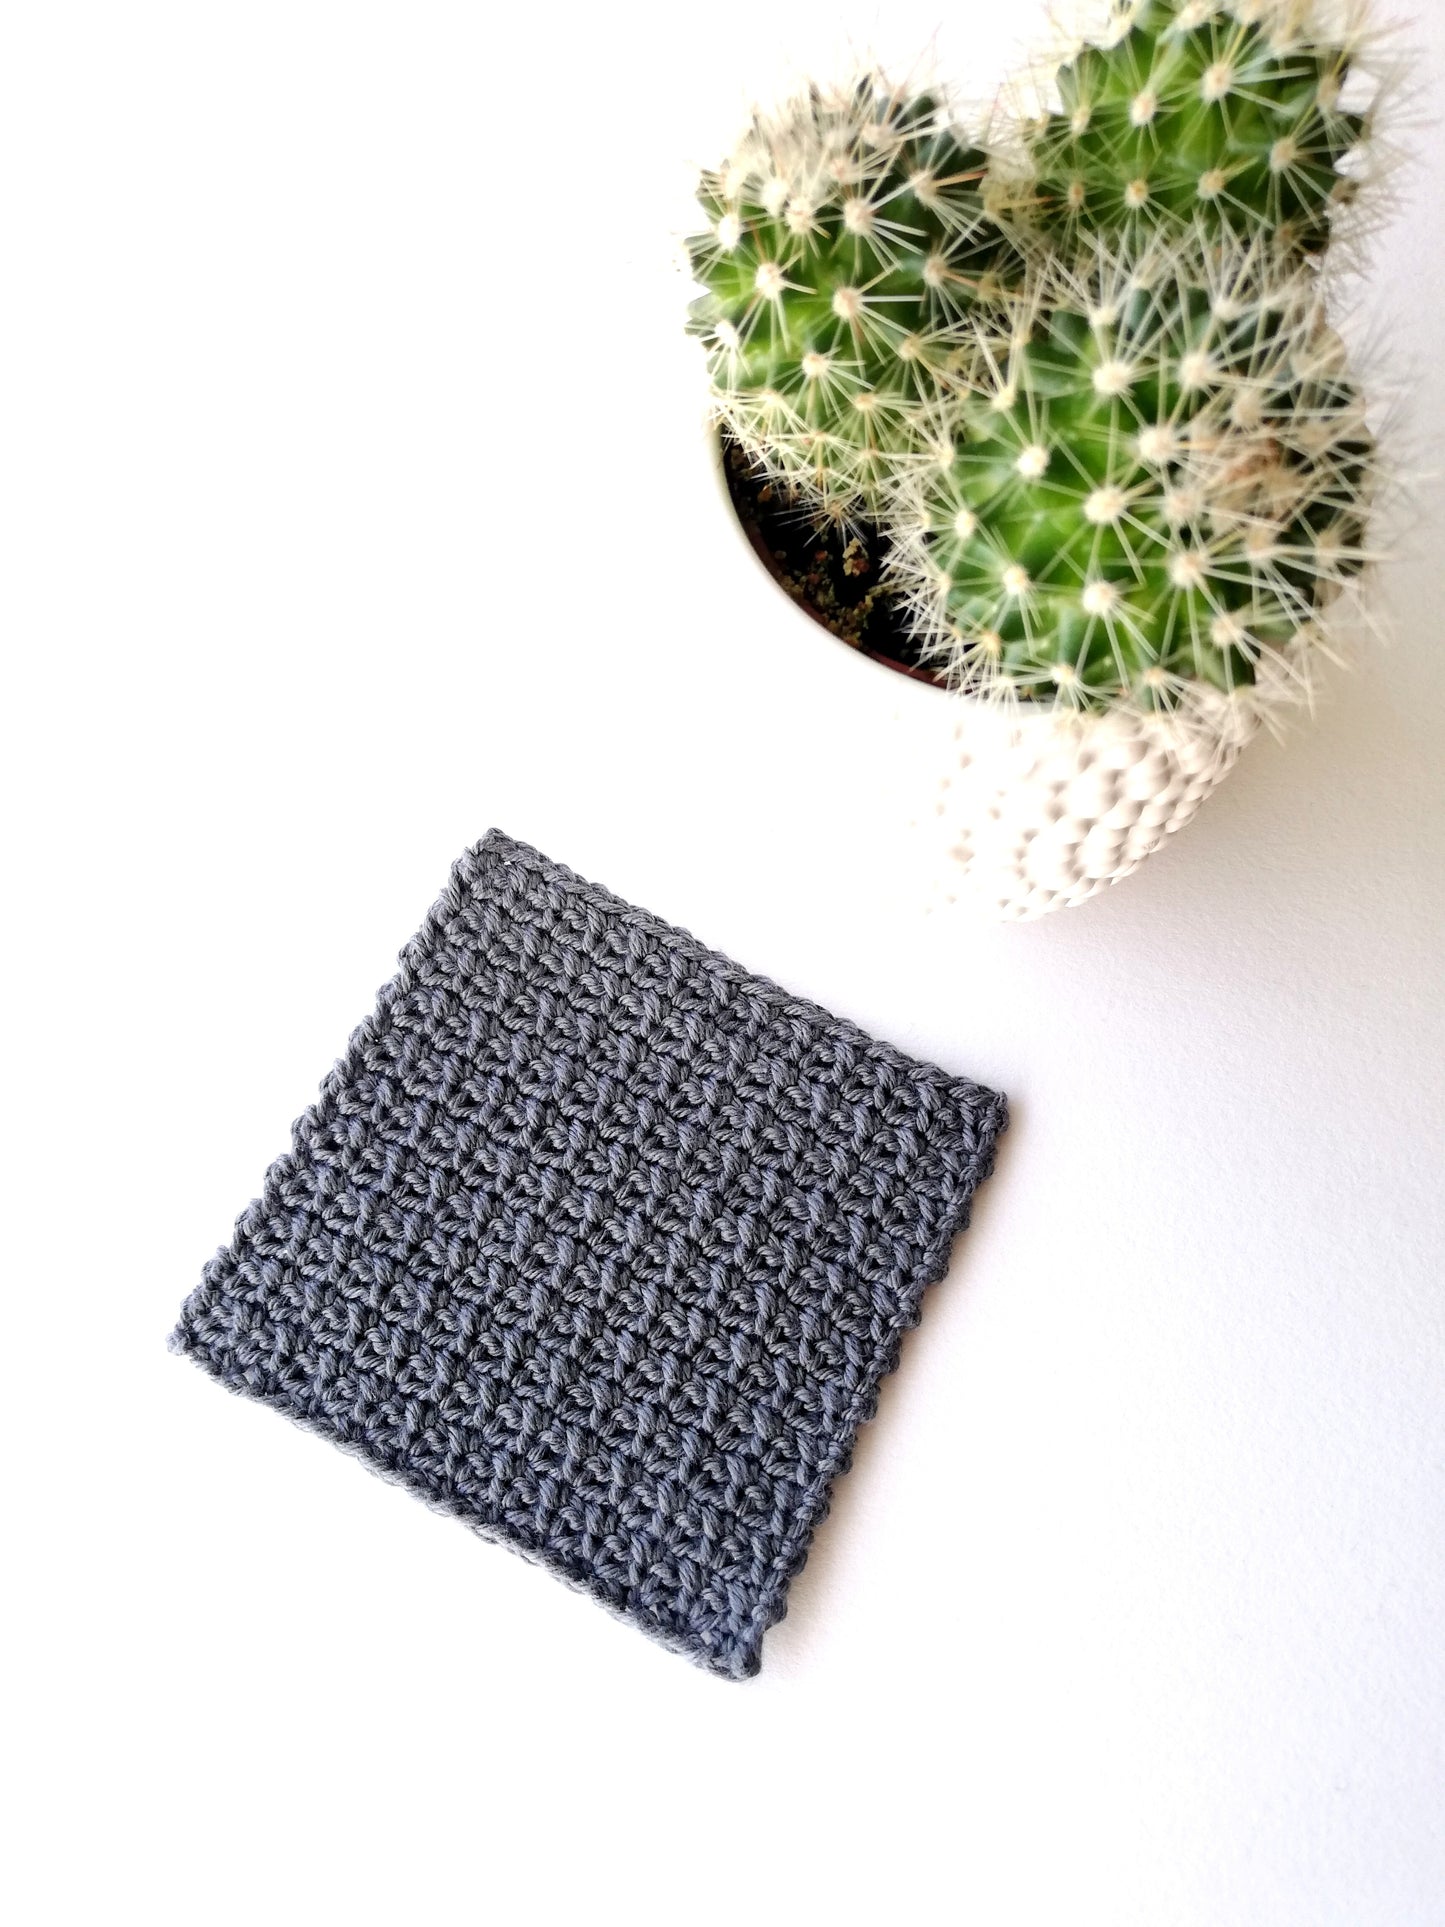 Simple single crochet mesh stitch coaster